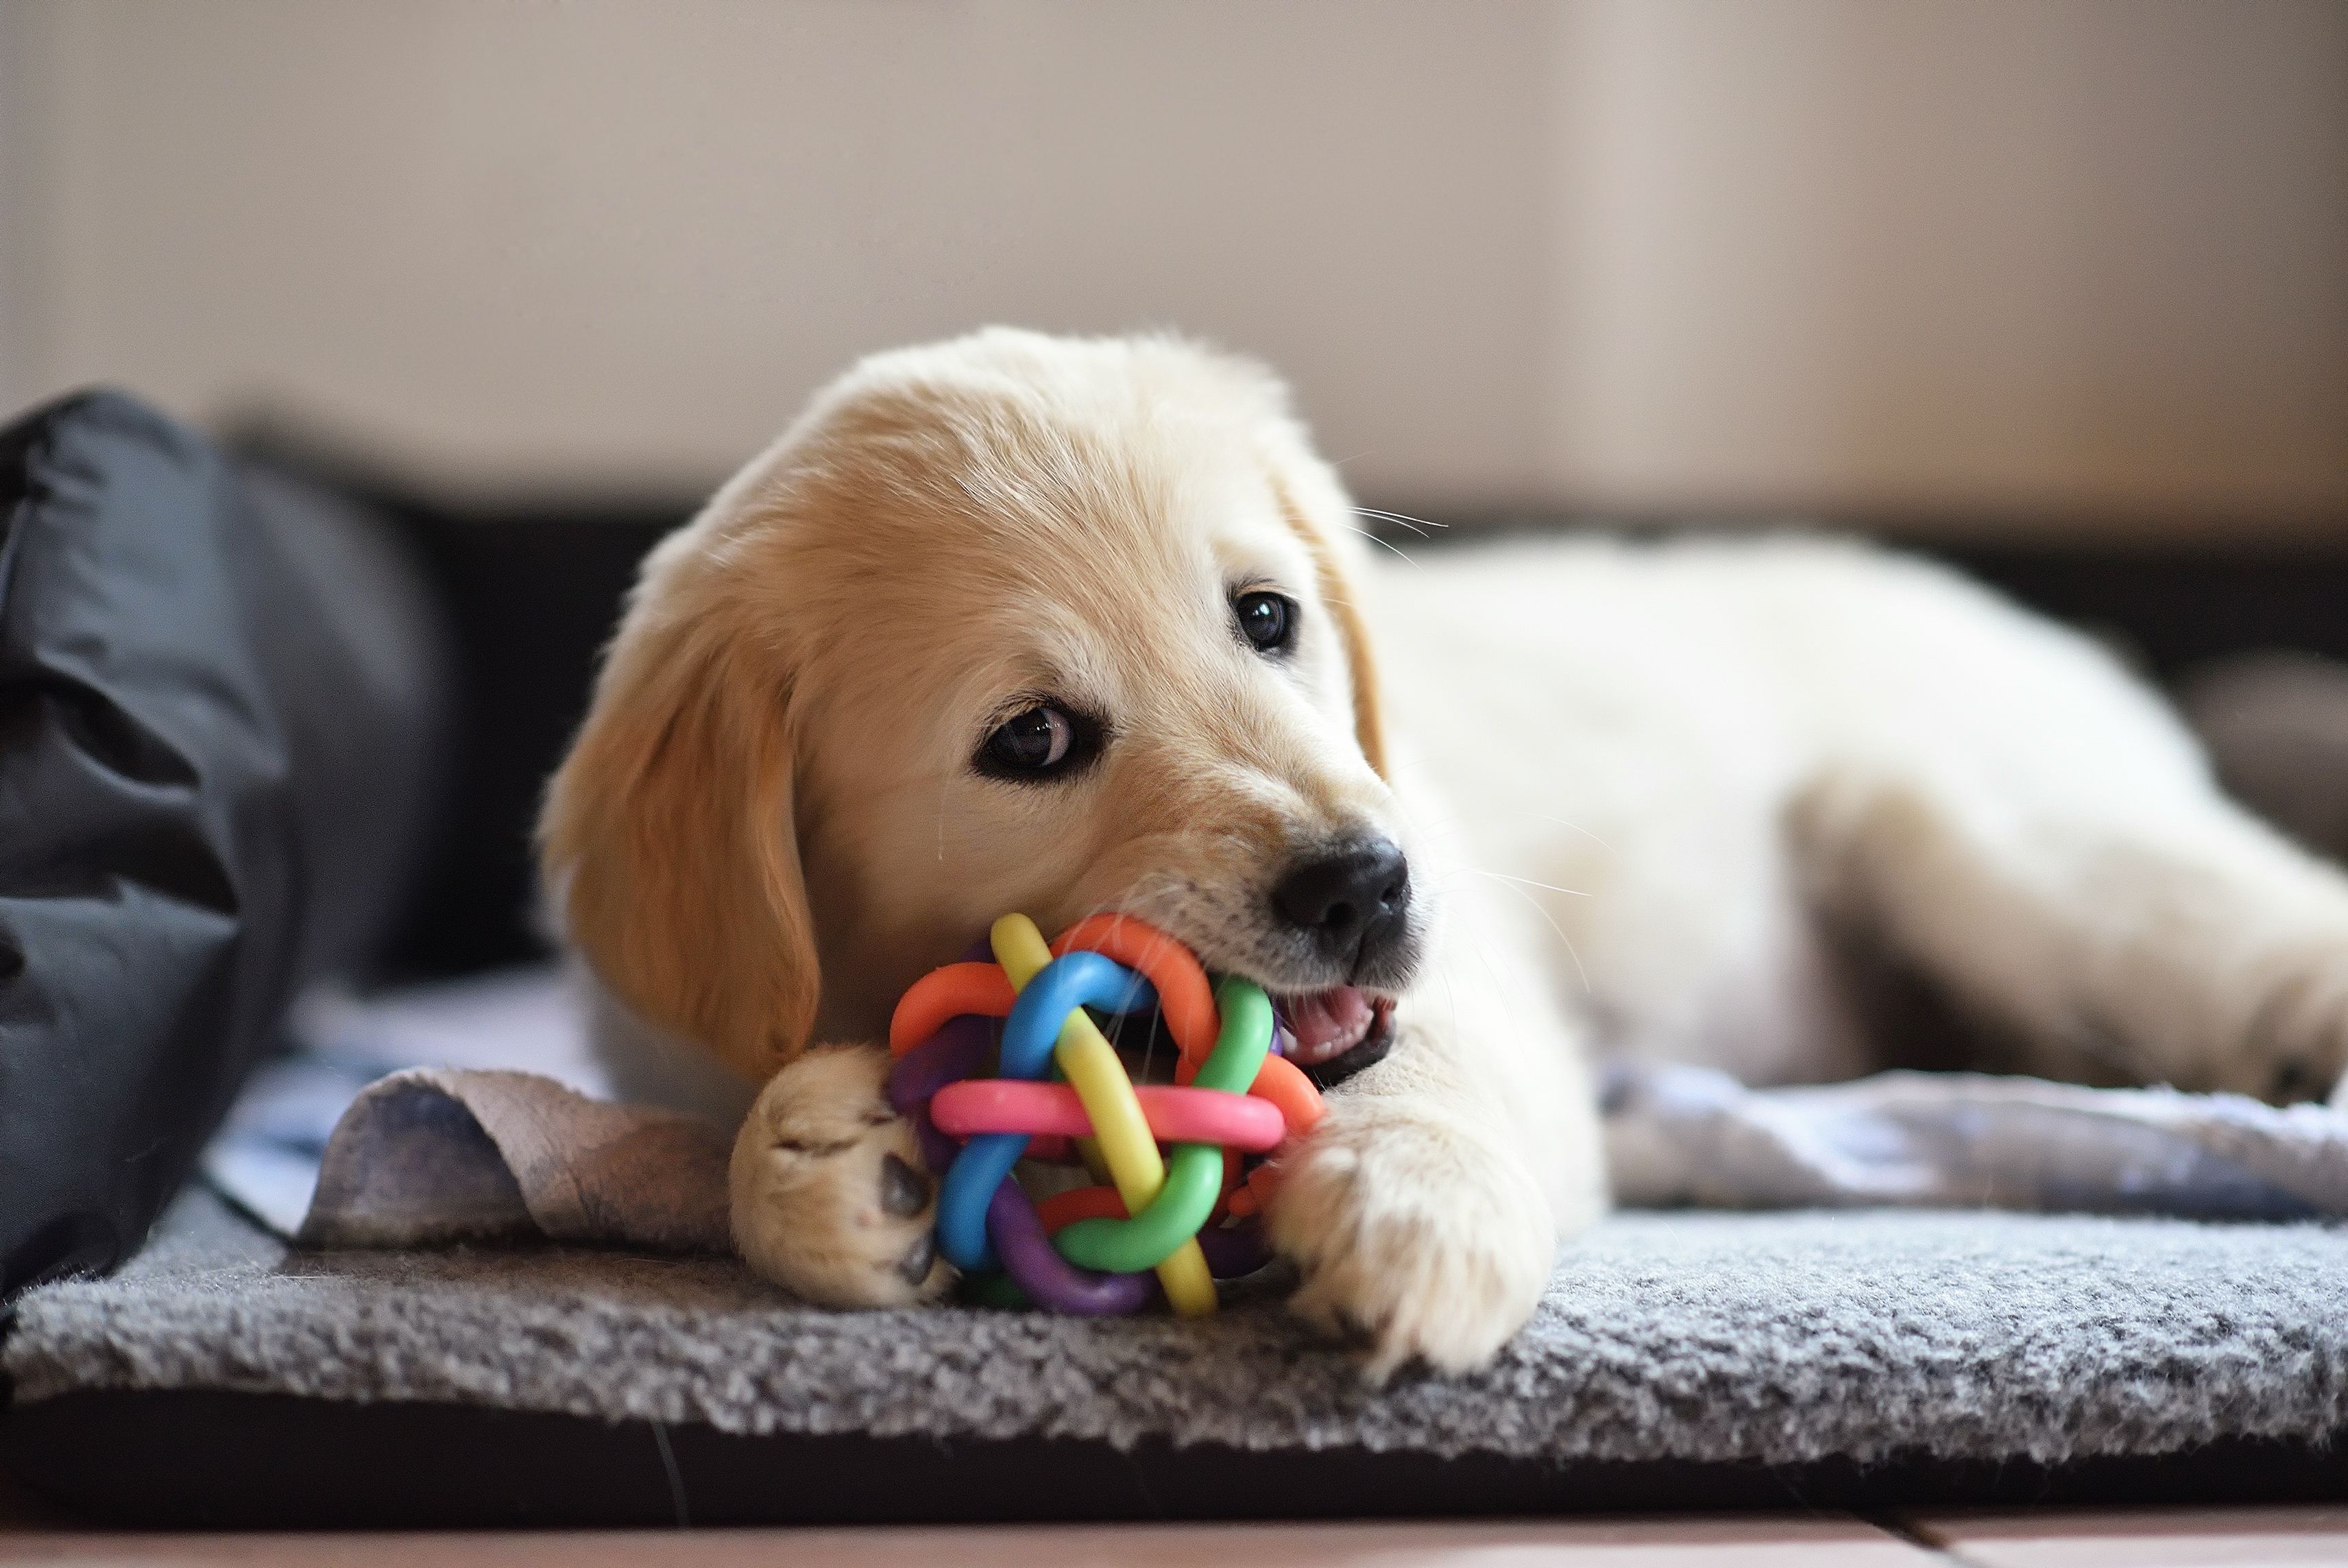 20 Indoor Dog Toys — Best Dog Treats, Balls, Chews & More